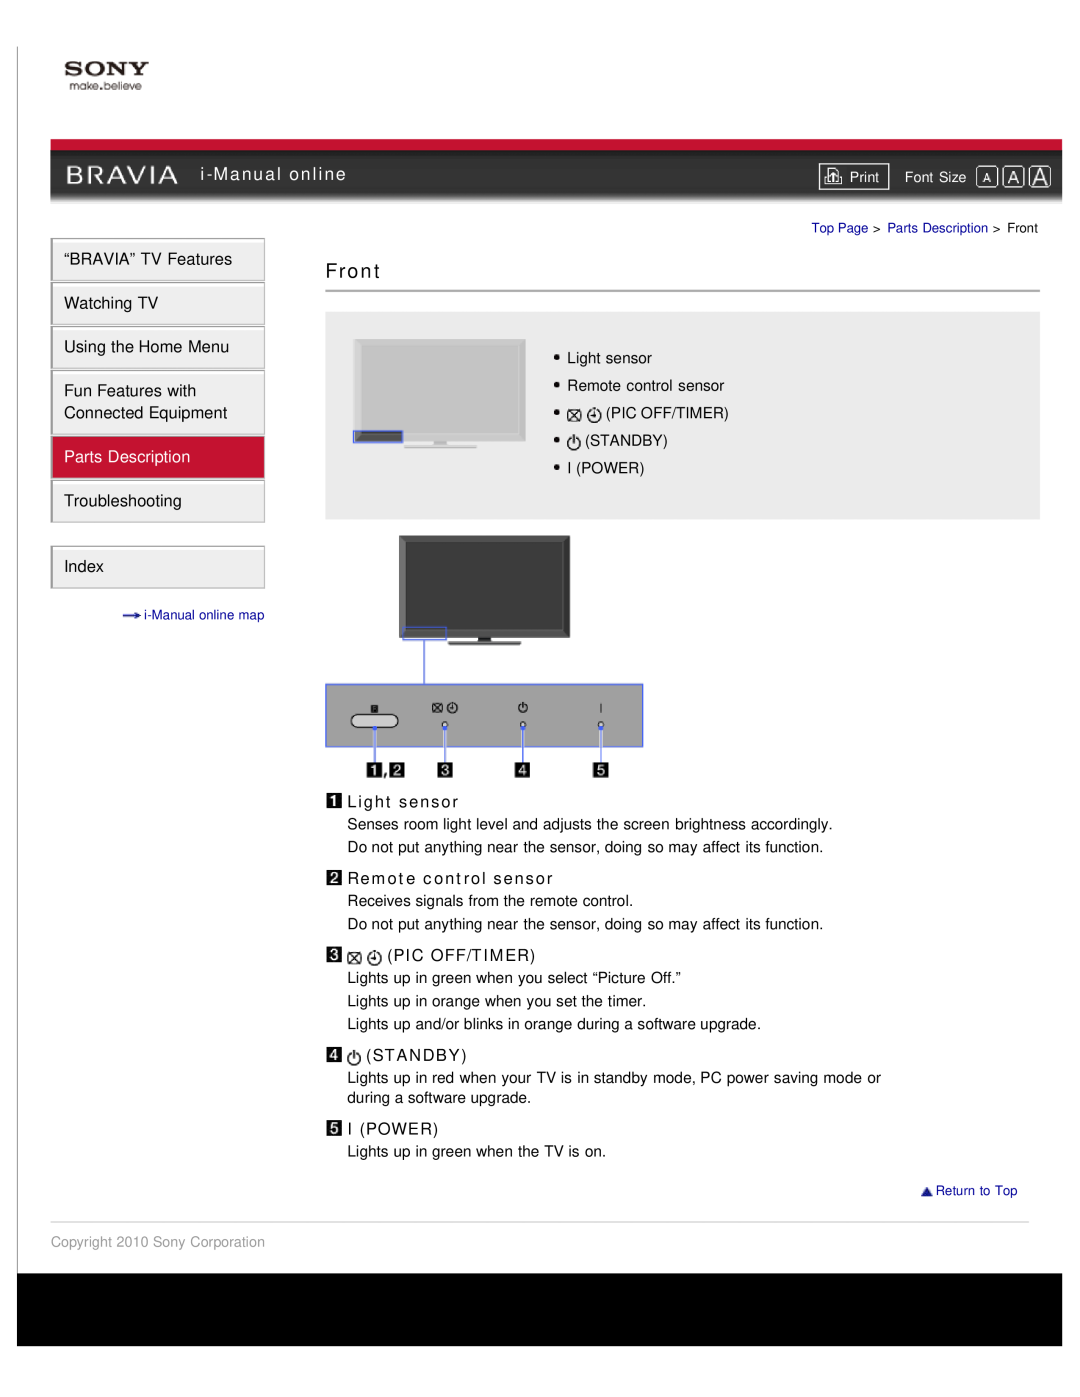 Sony NX80X Front, i-Manual online, Parts Description, Light sensor, Remote control sensor, Pic Off/Timer, Standby, I Power 